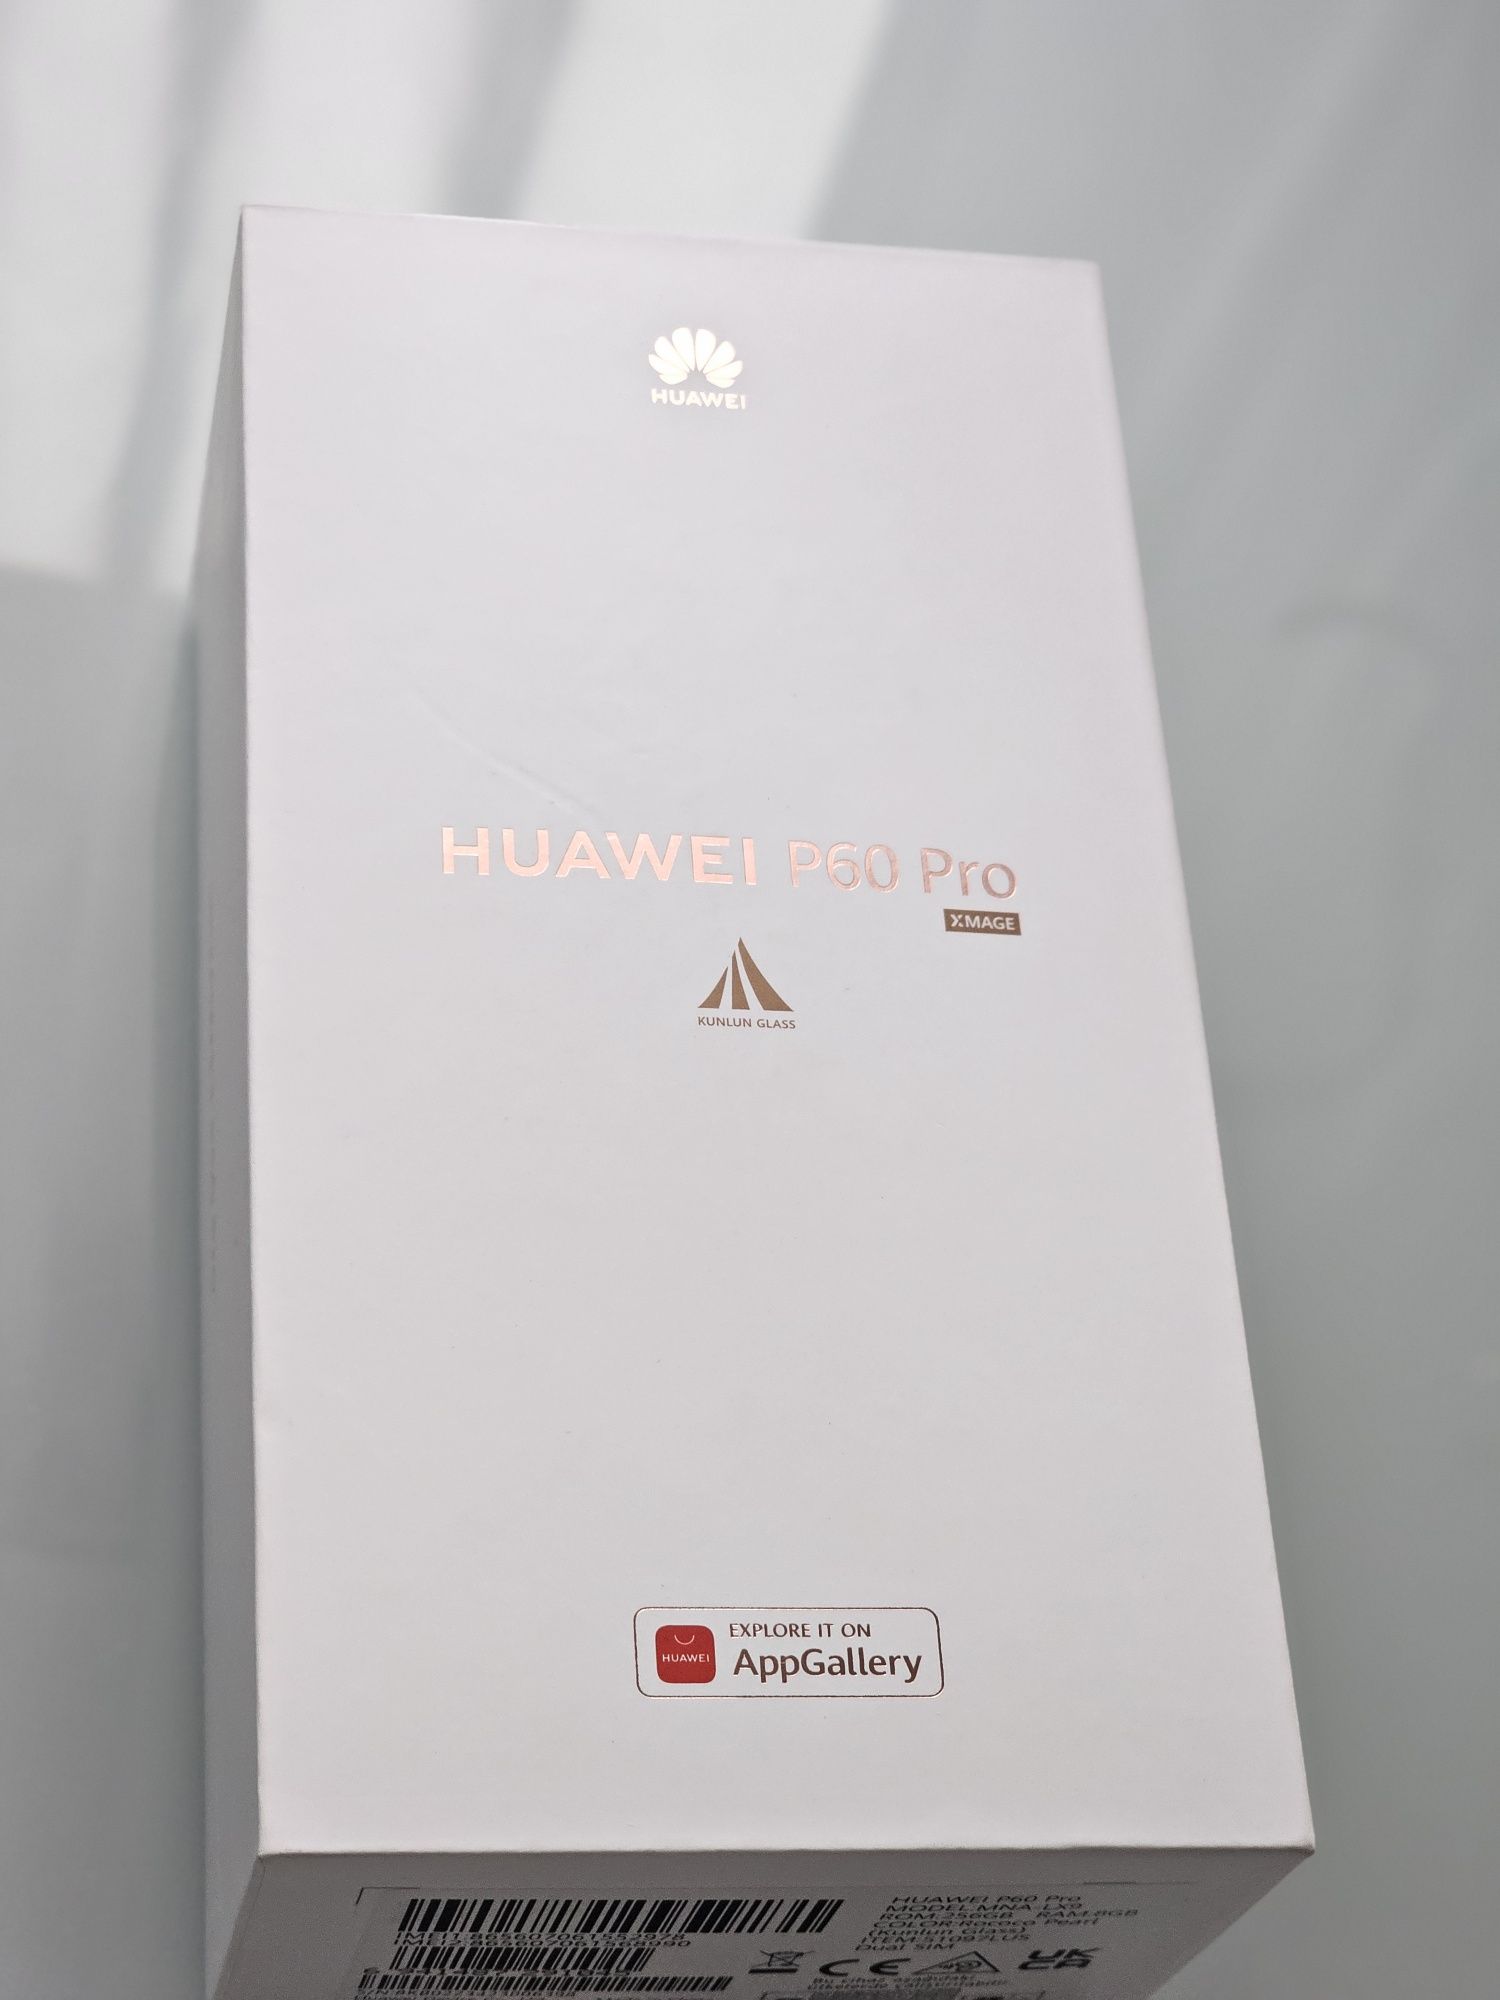 Huawei P60 Pro 256G